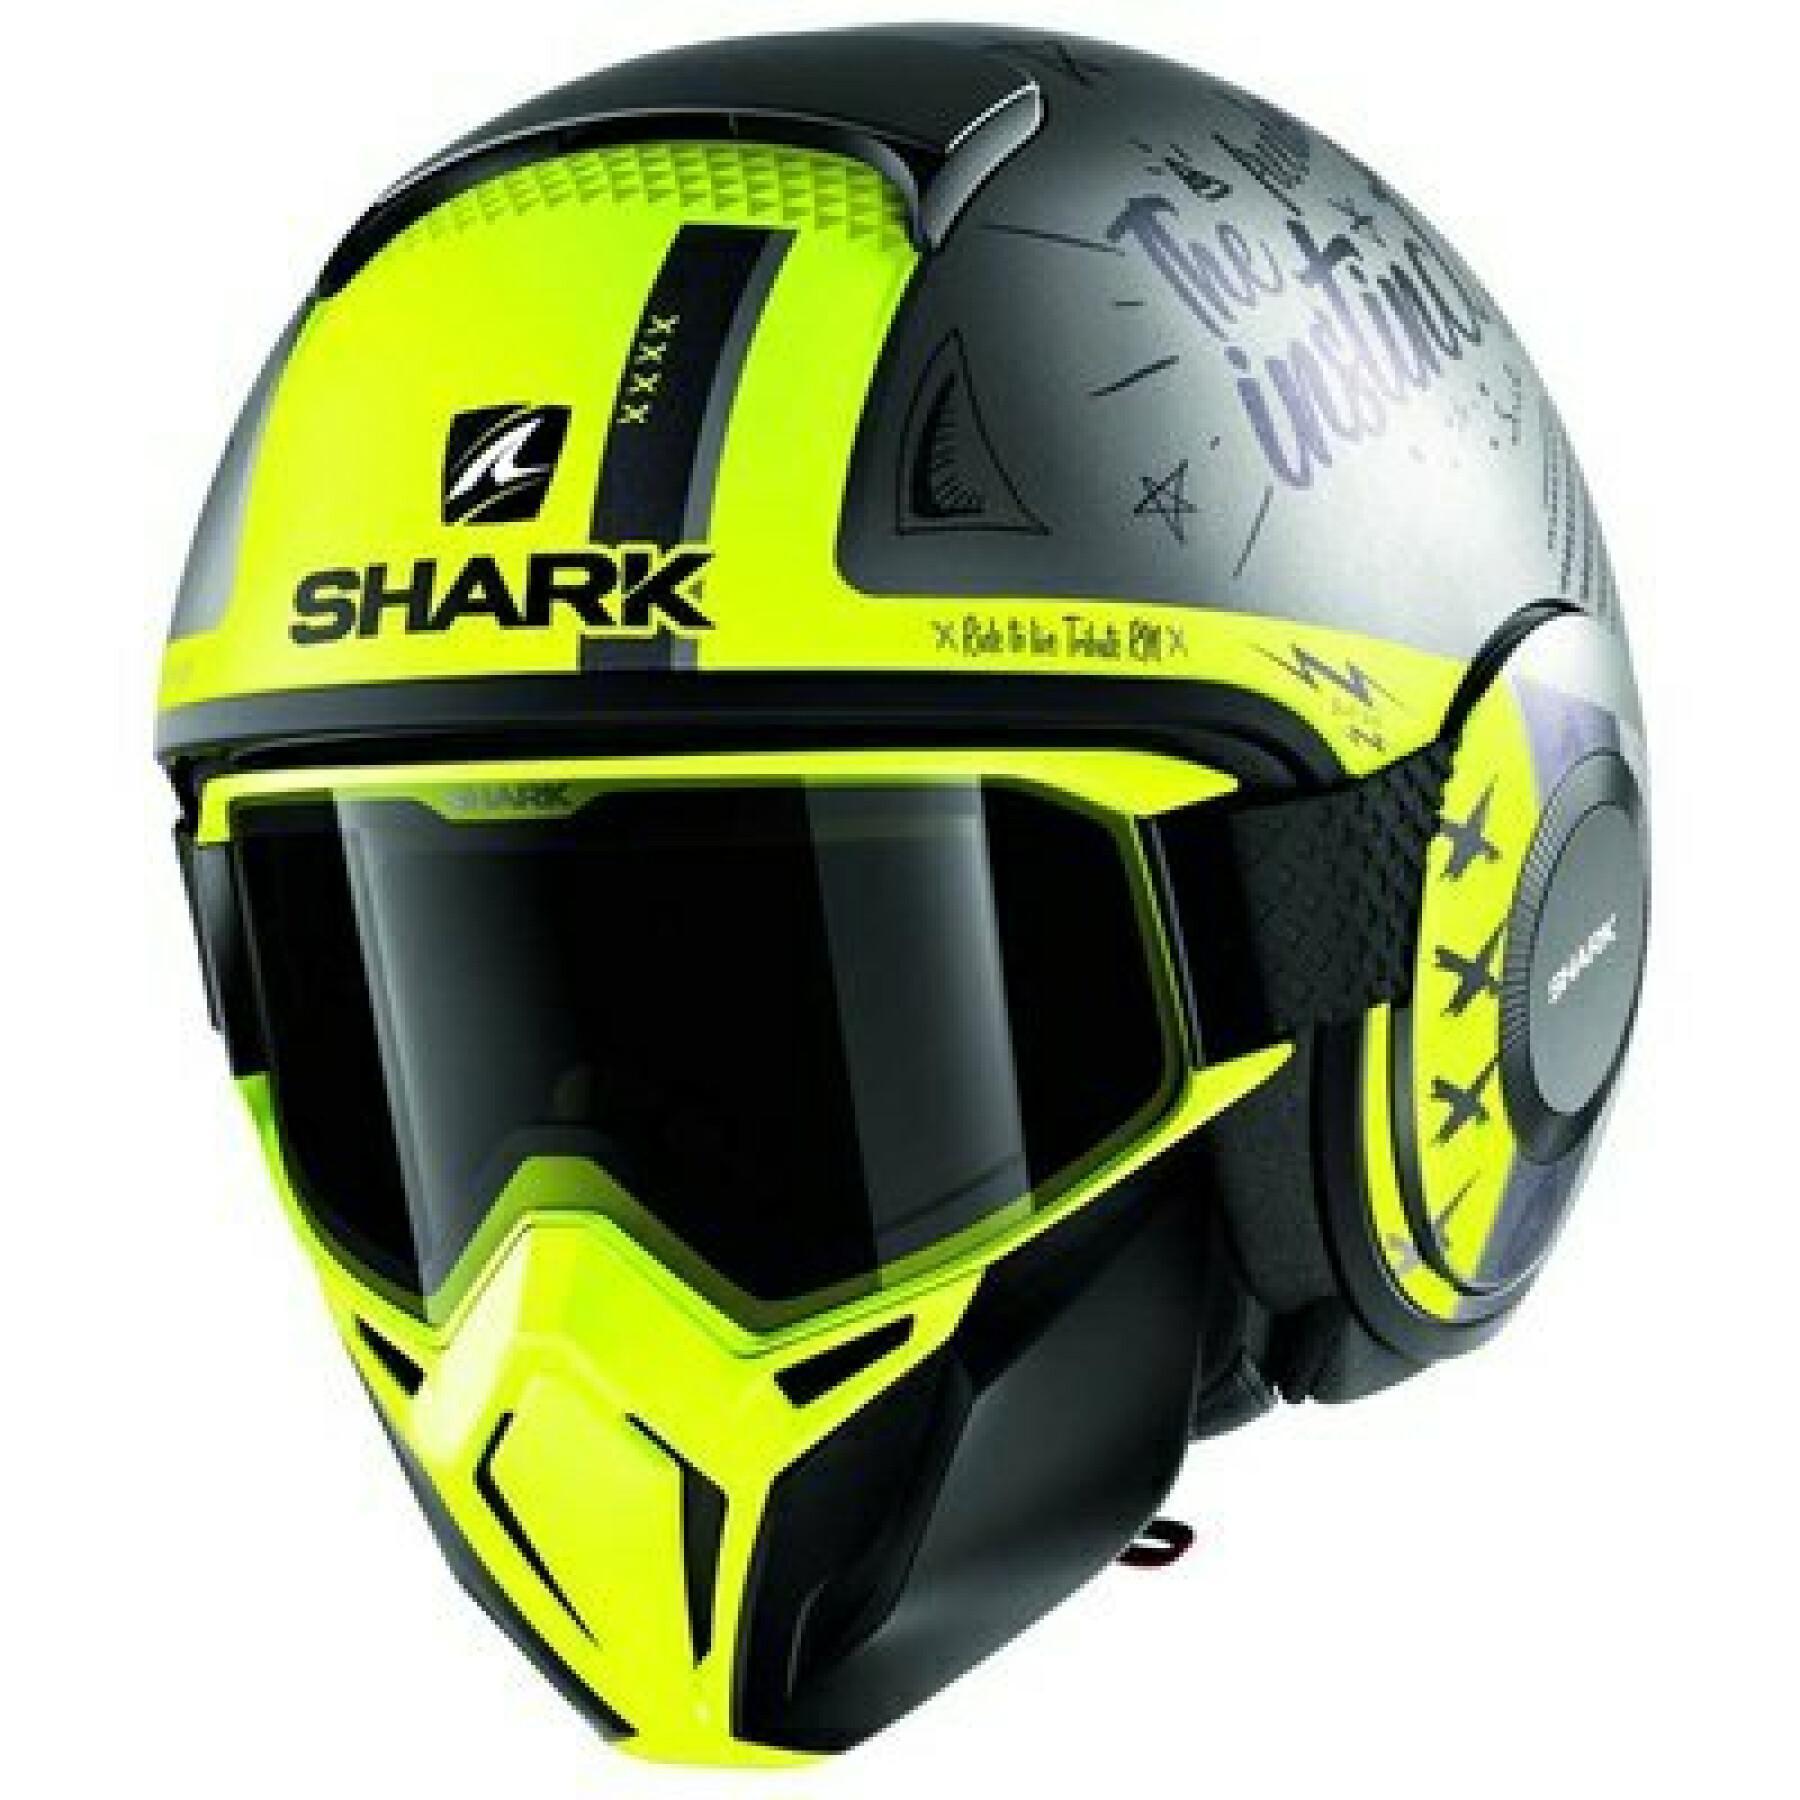 Jet motorcycle helmet Shark street drak tribute RM